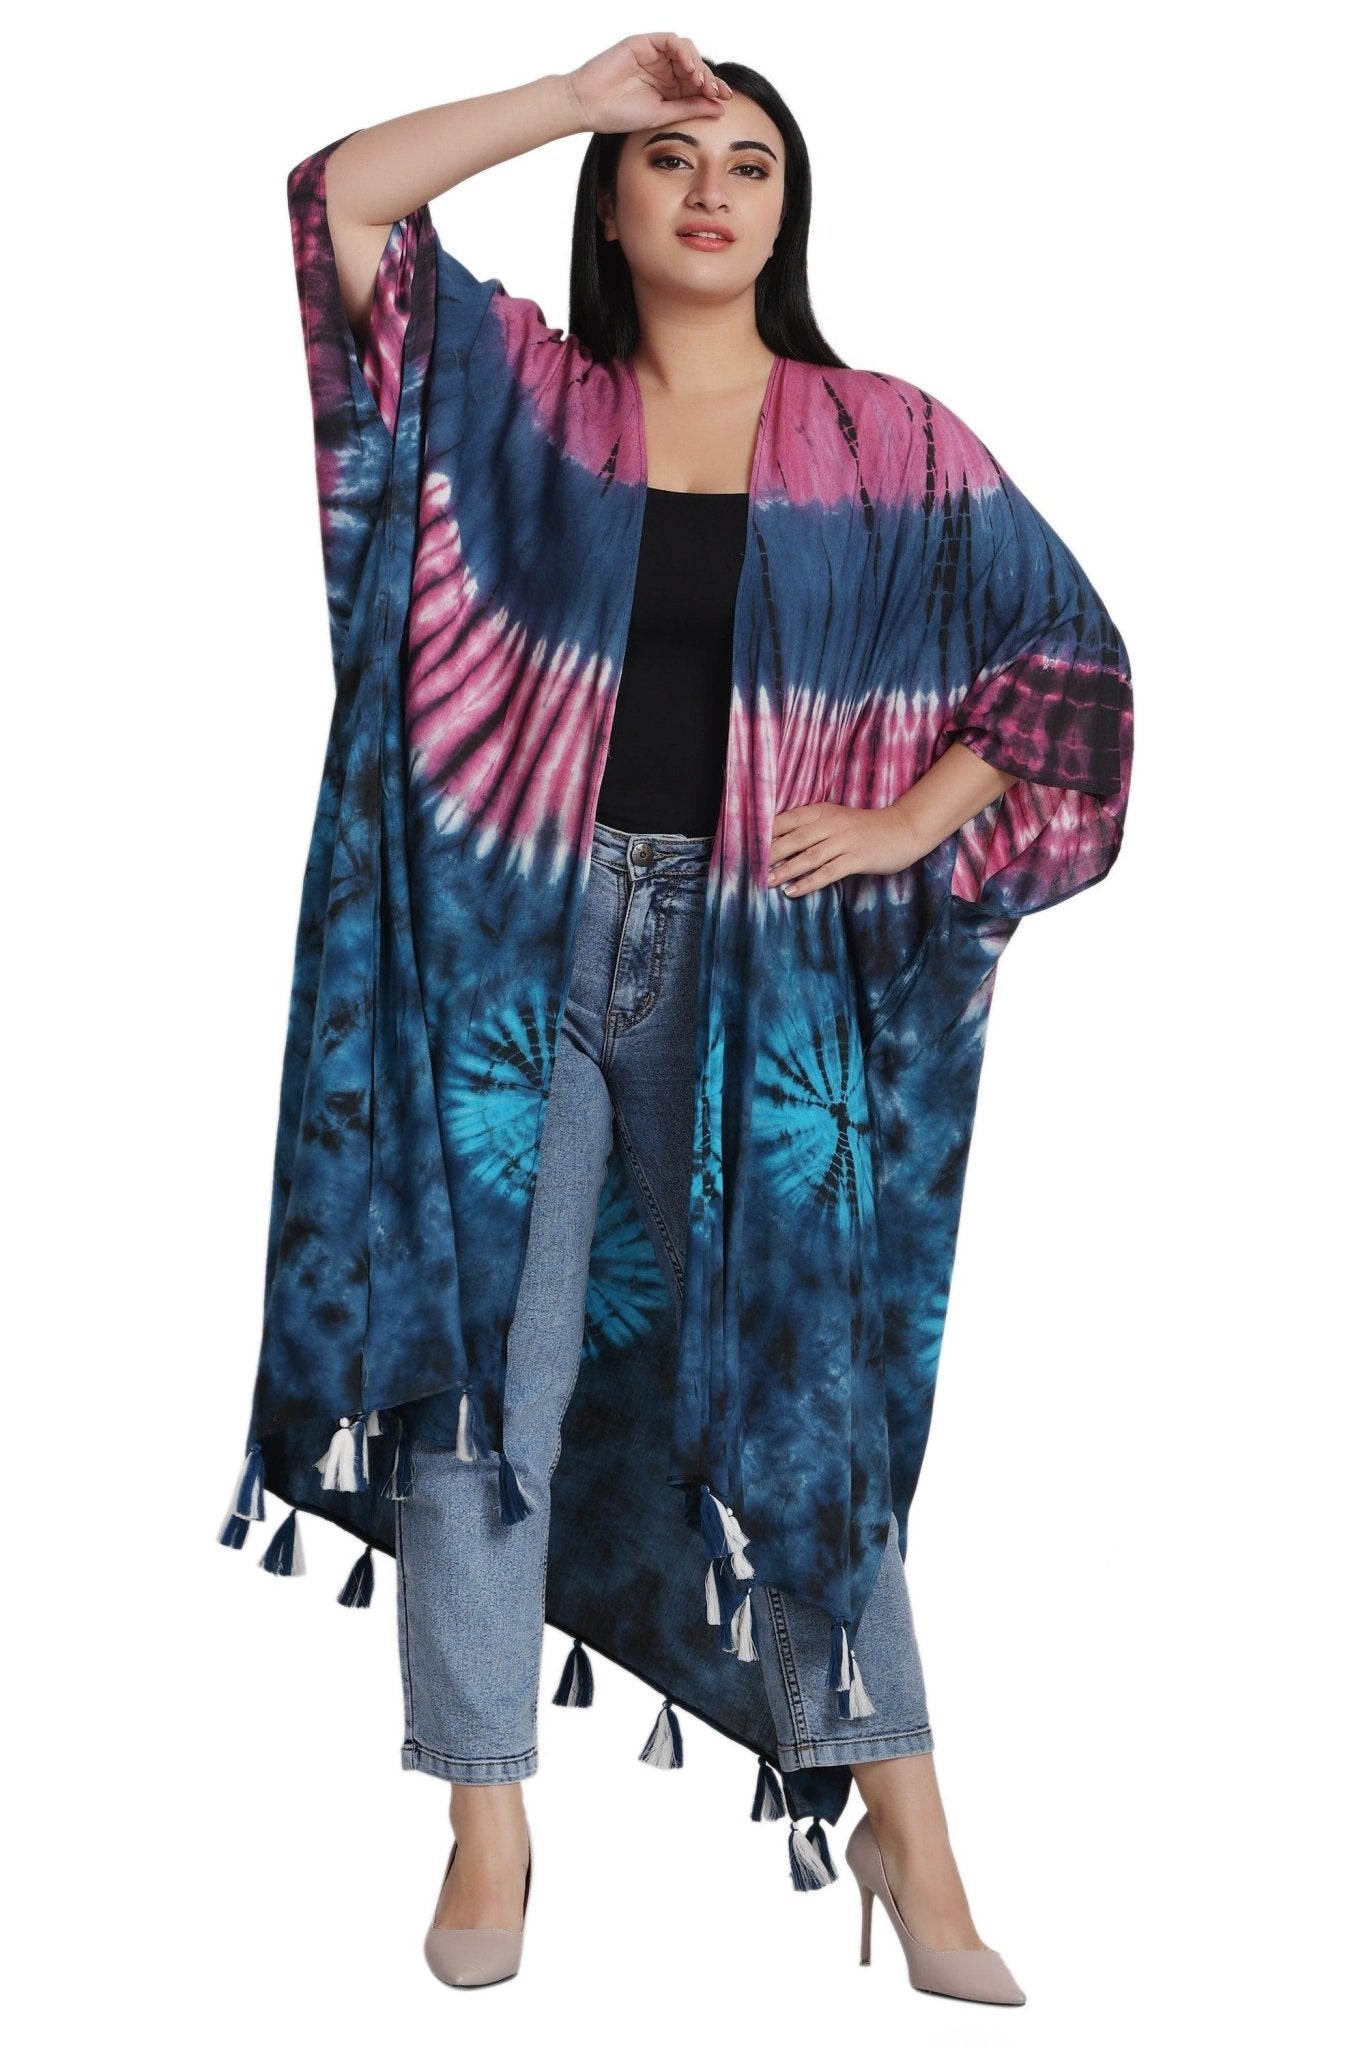 Tie Dye Beach Cover-Up Kimono 22036 - Advance Apparels Inc